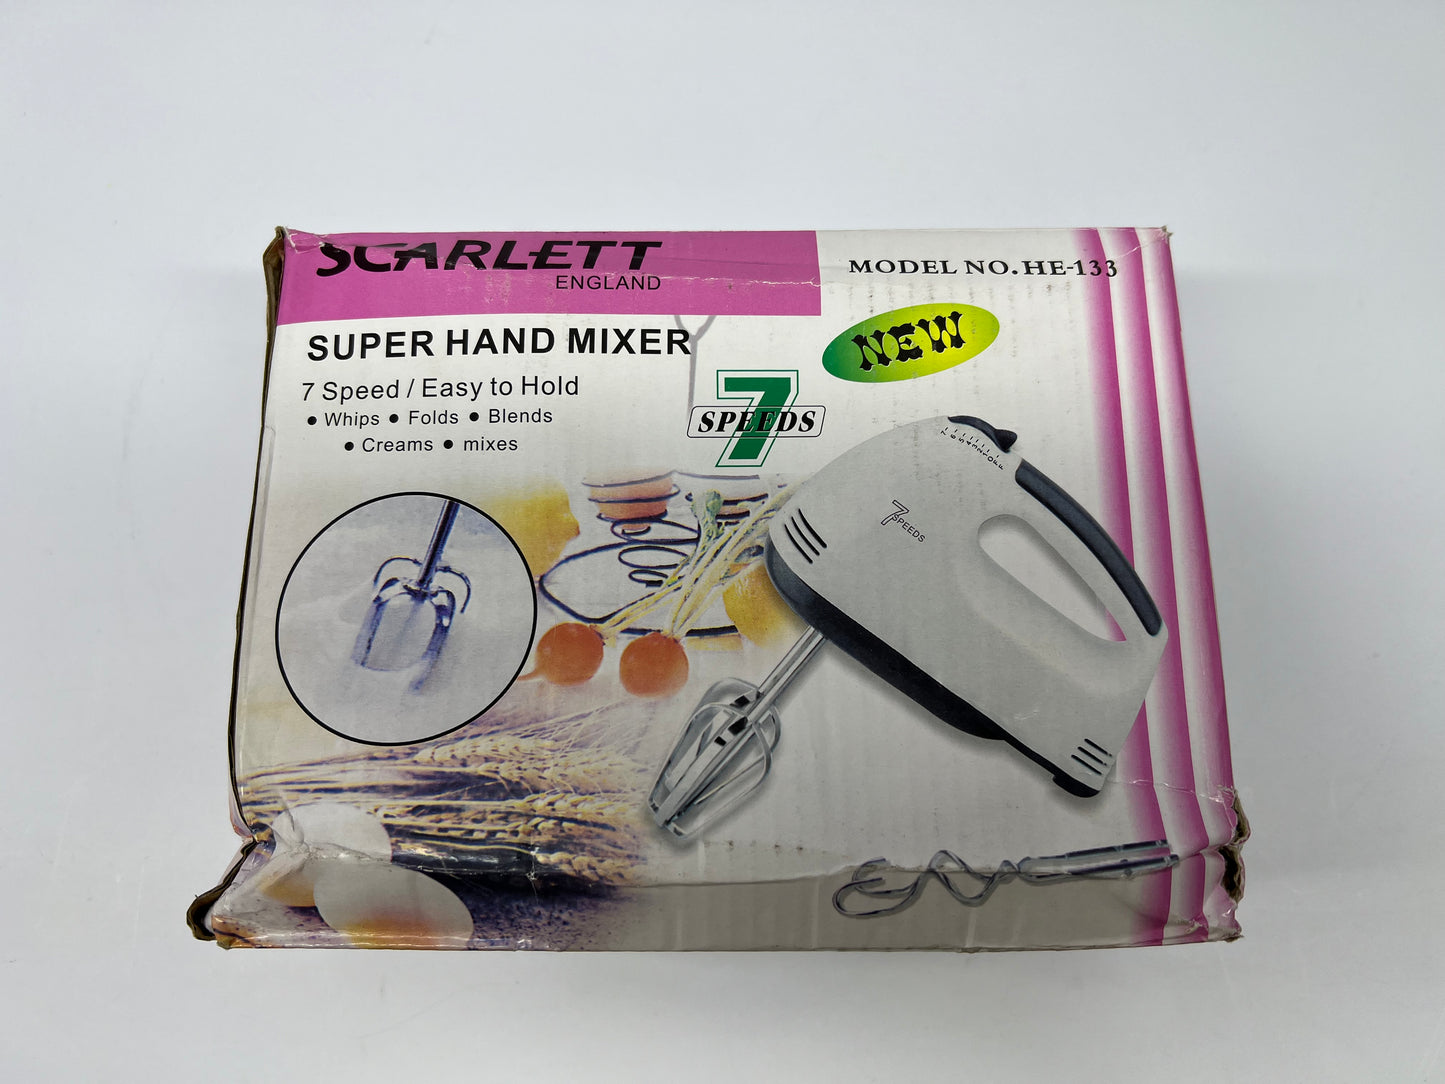 Super Hand Mixer Scarlett